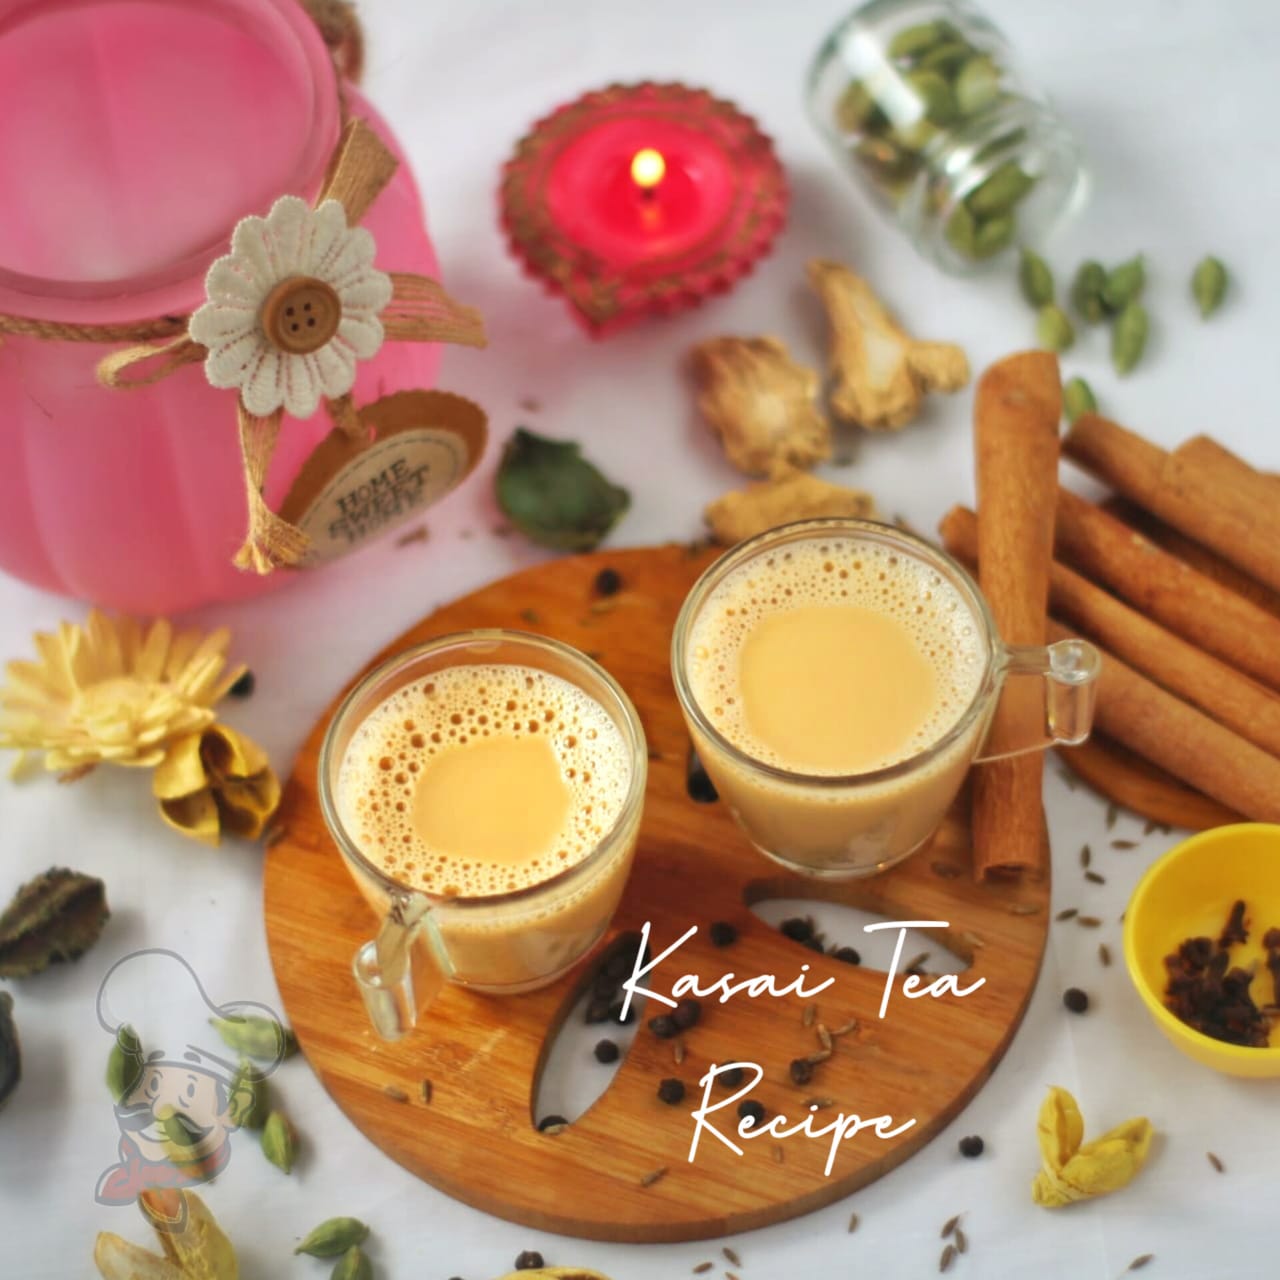 kasai tea recipe